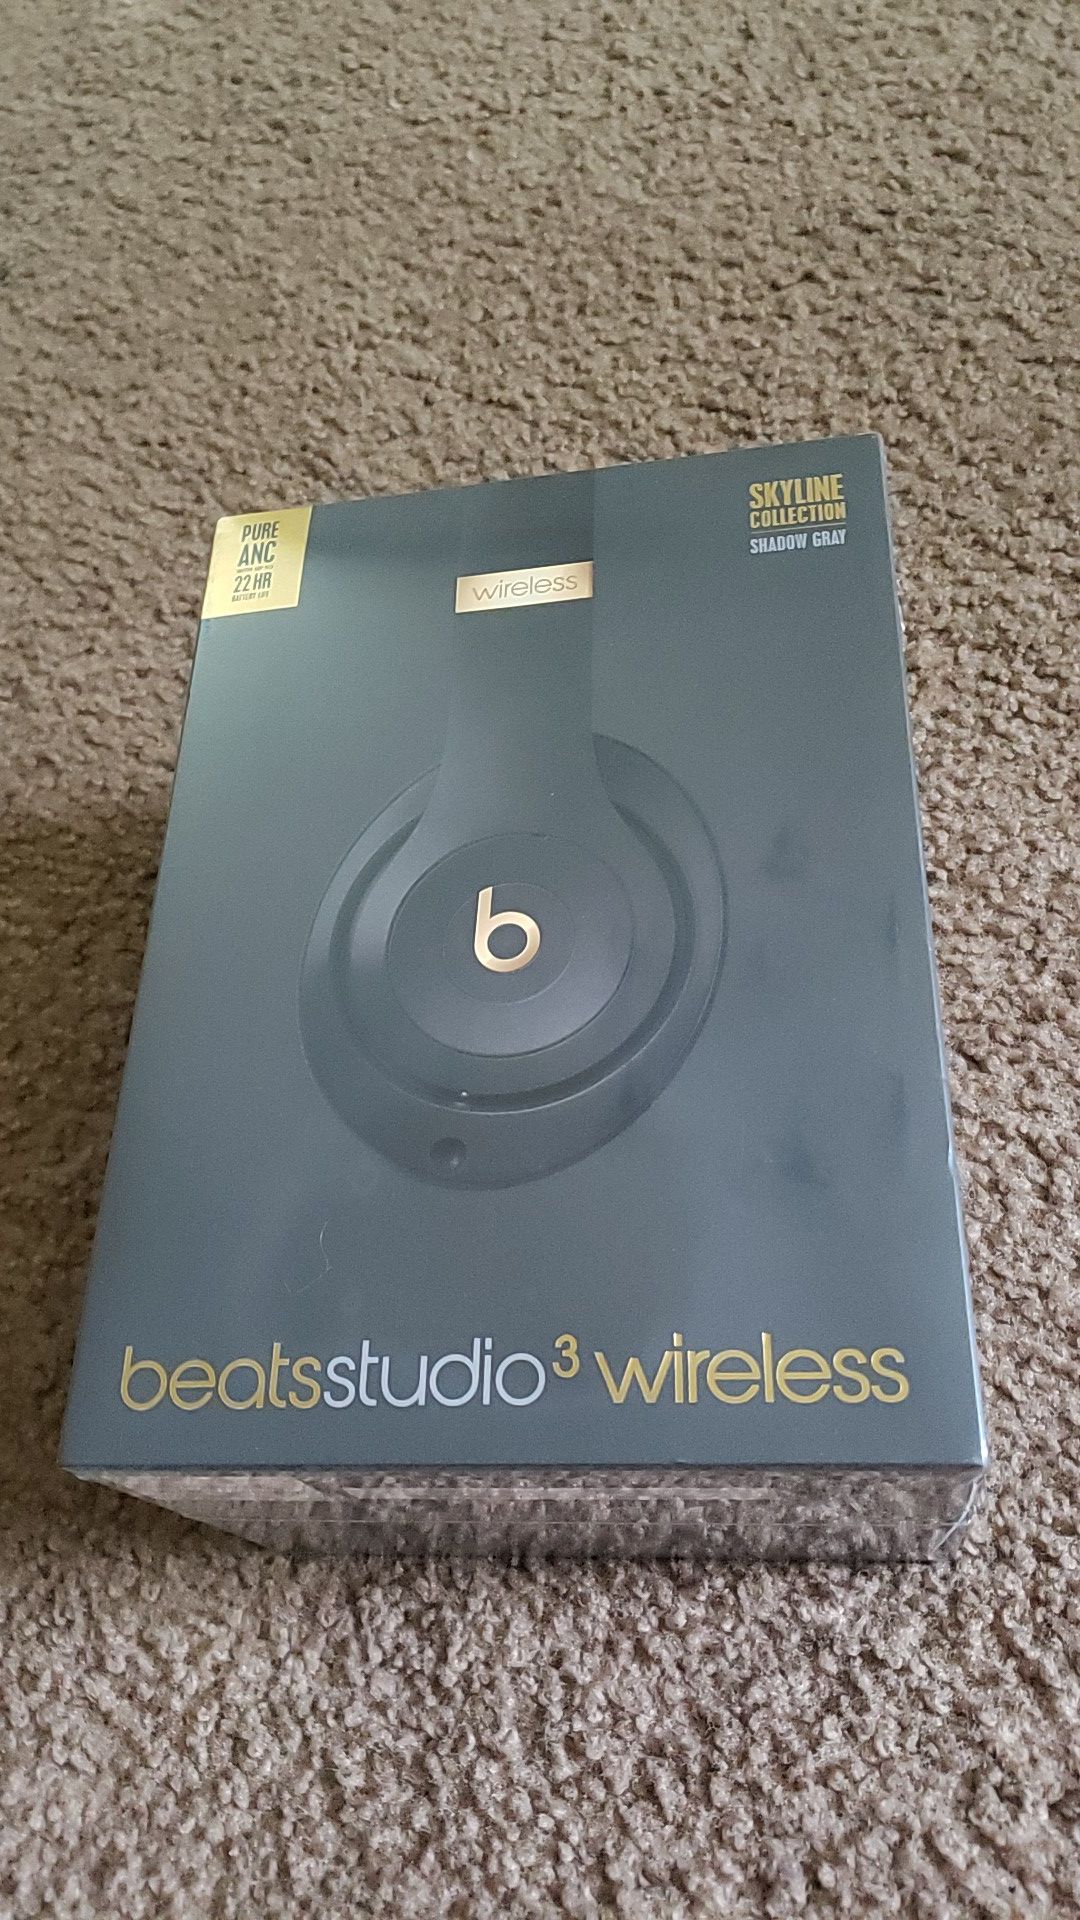 Beats studio 3 wireless 200 bucks